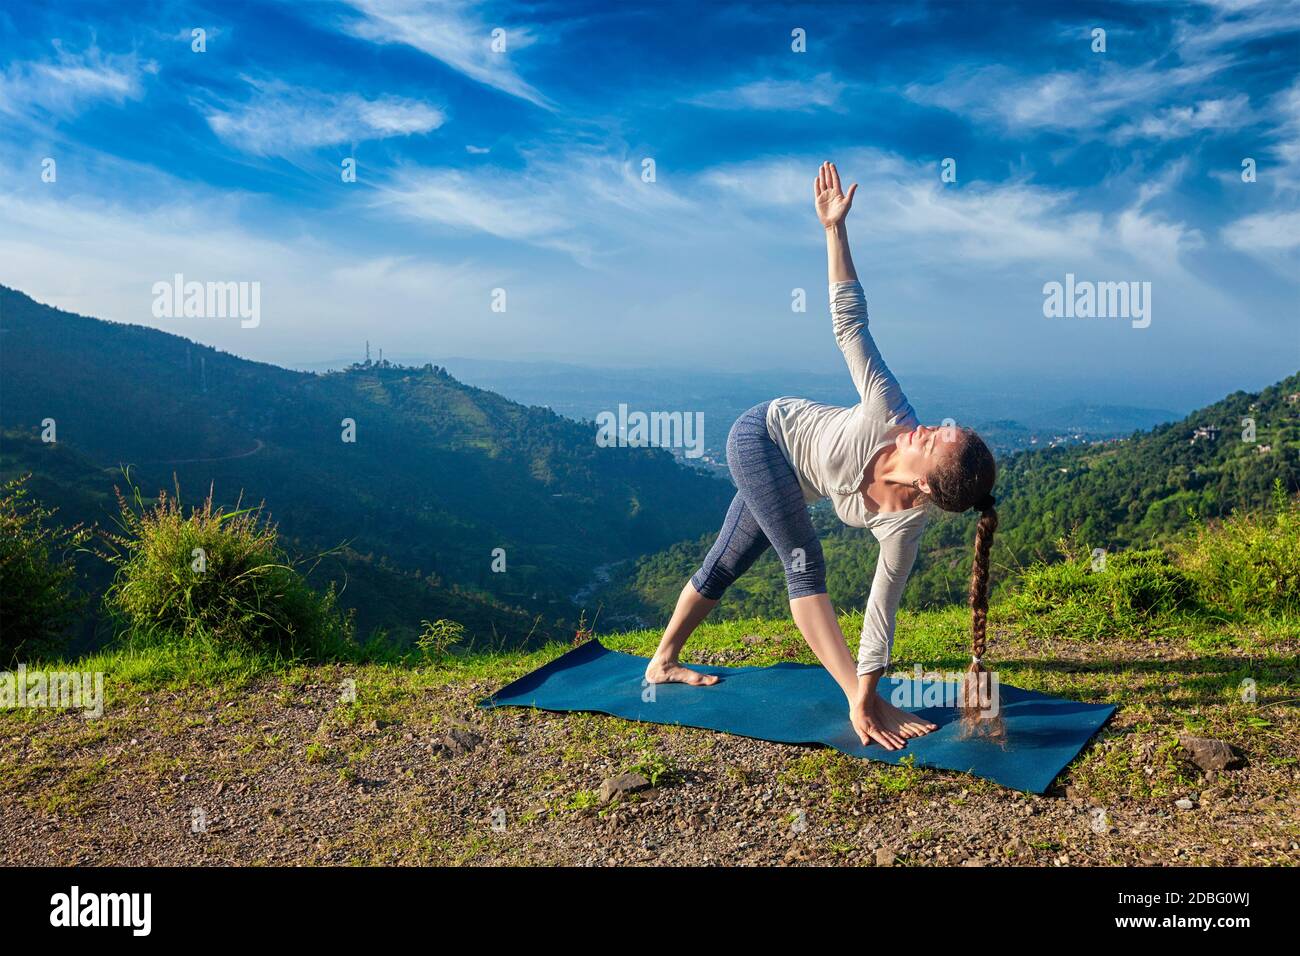 Woman doing Ashtanga Vinyasa yoga asana Parivrtta trikonasana - revolved triangle pose outdoors in mountains in the morning Stock Photo